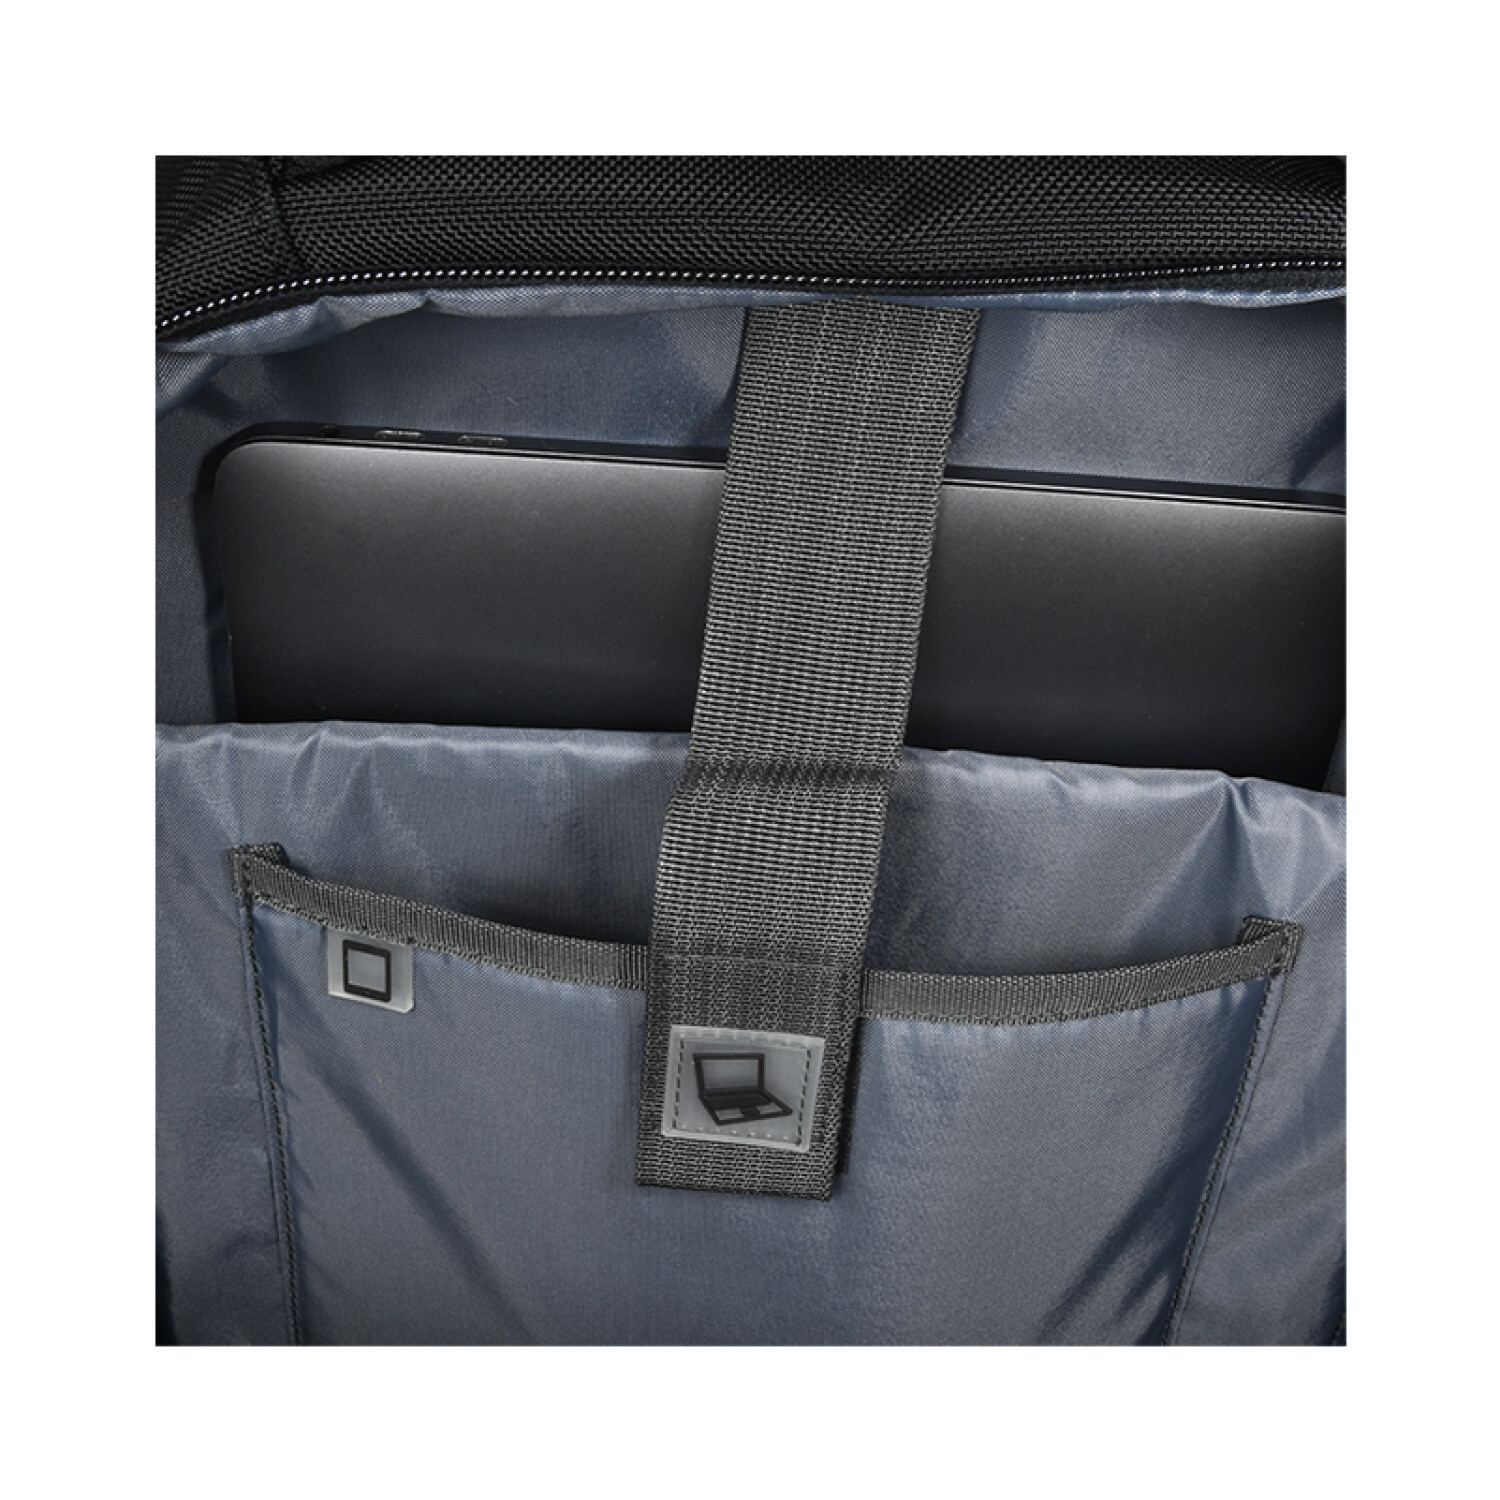 Emblem - laptop backpack - KNB-582